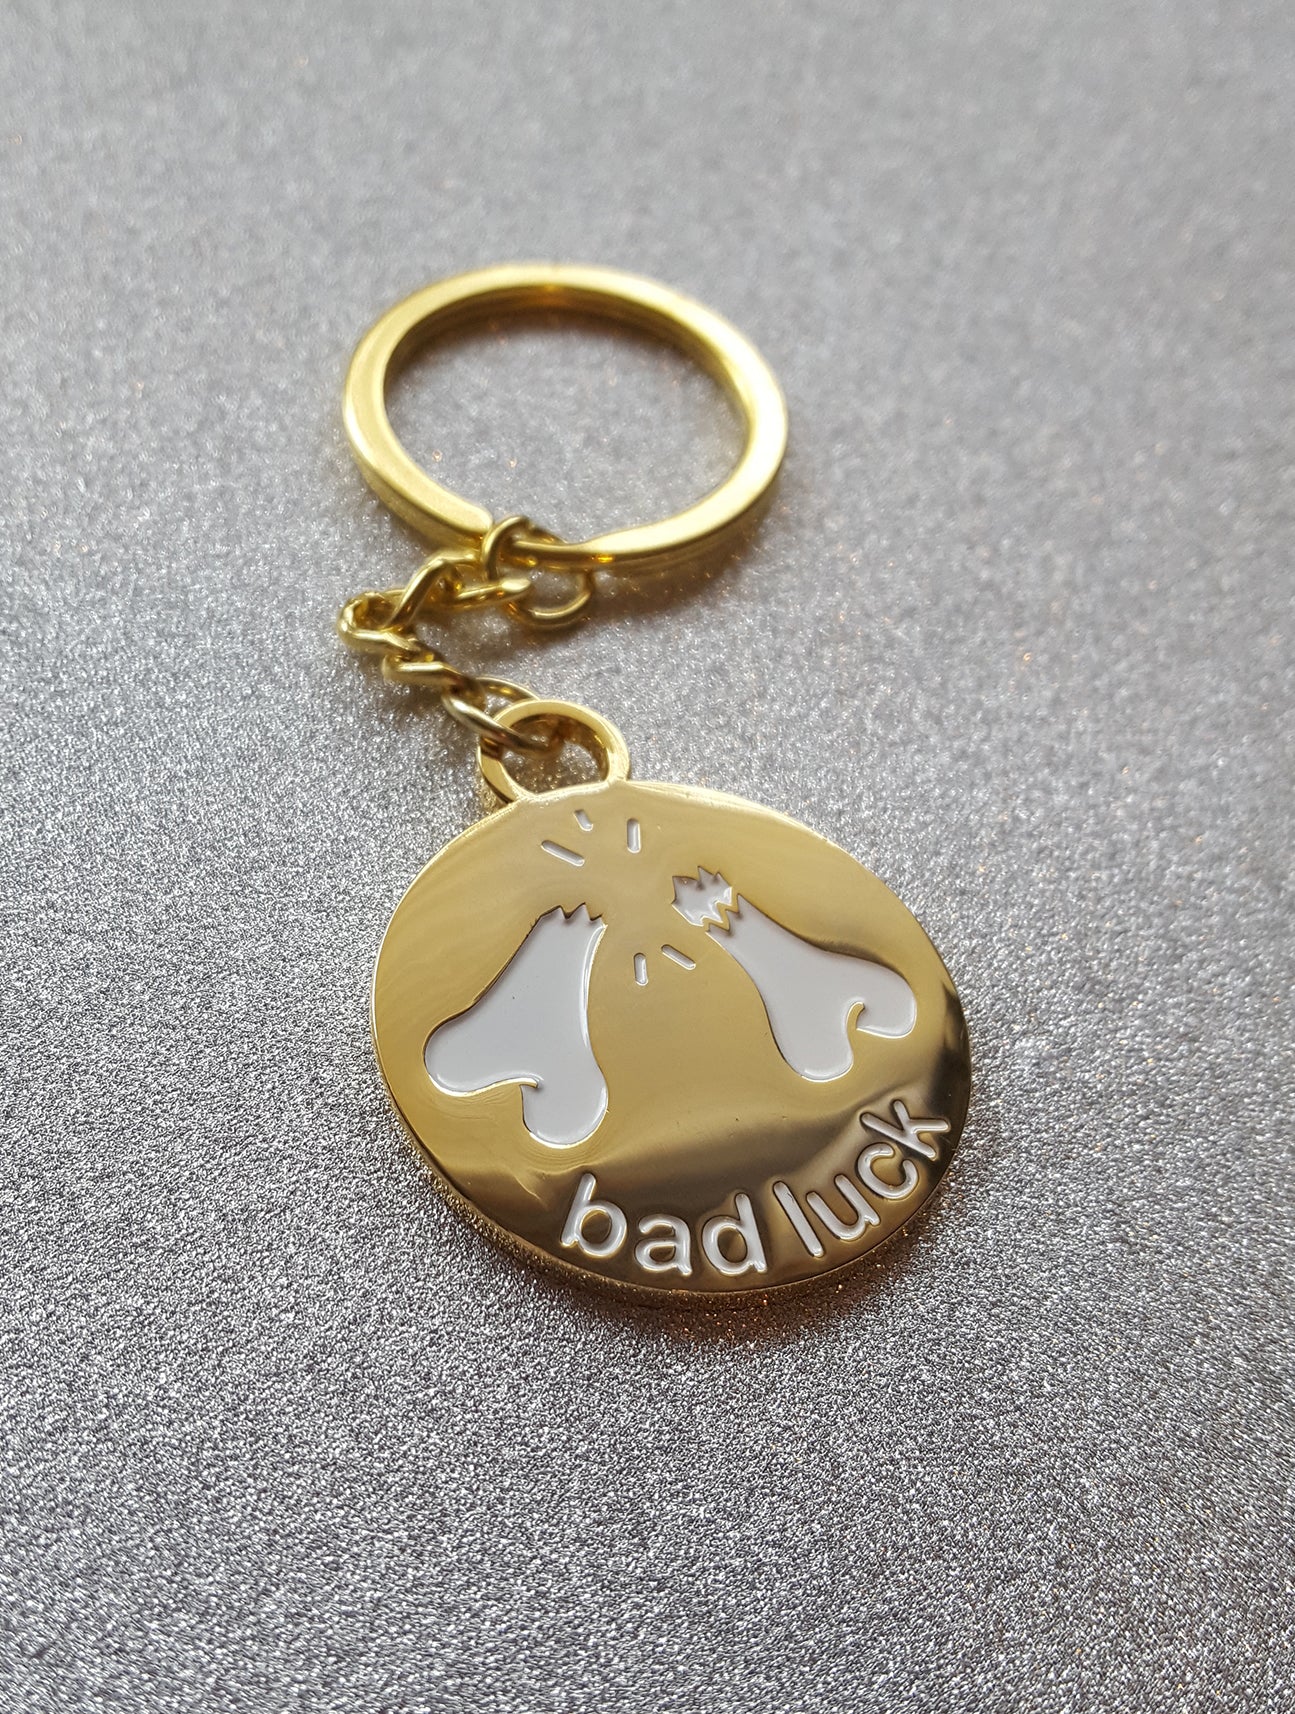 Bad Luck keychain